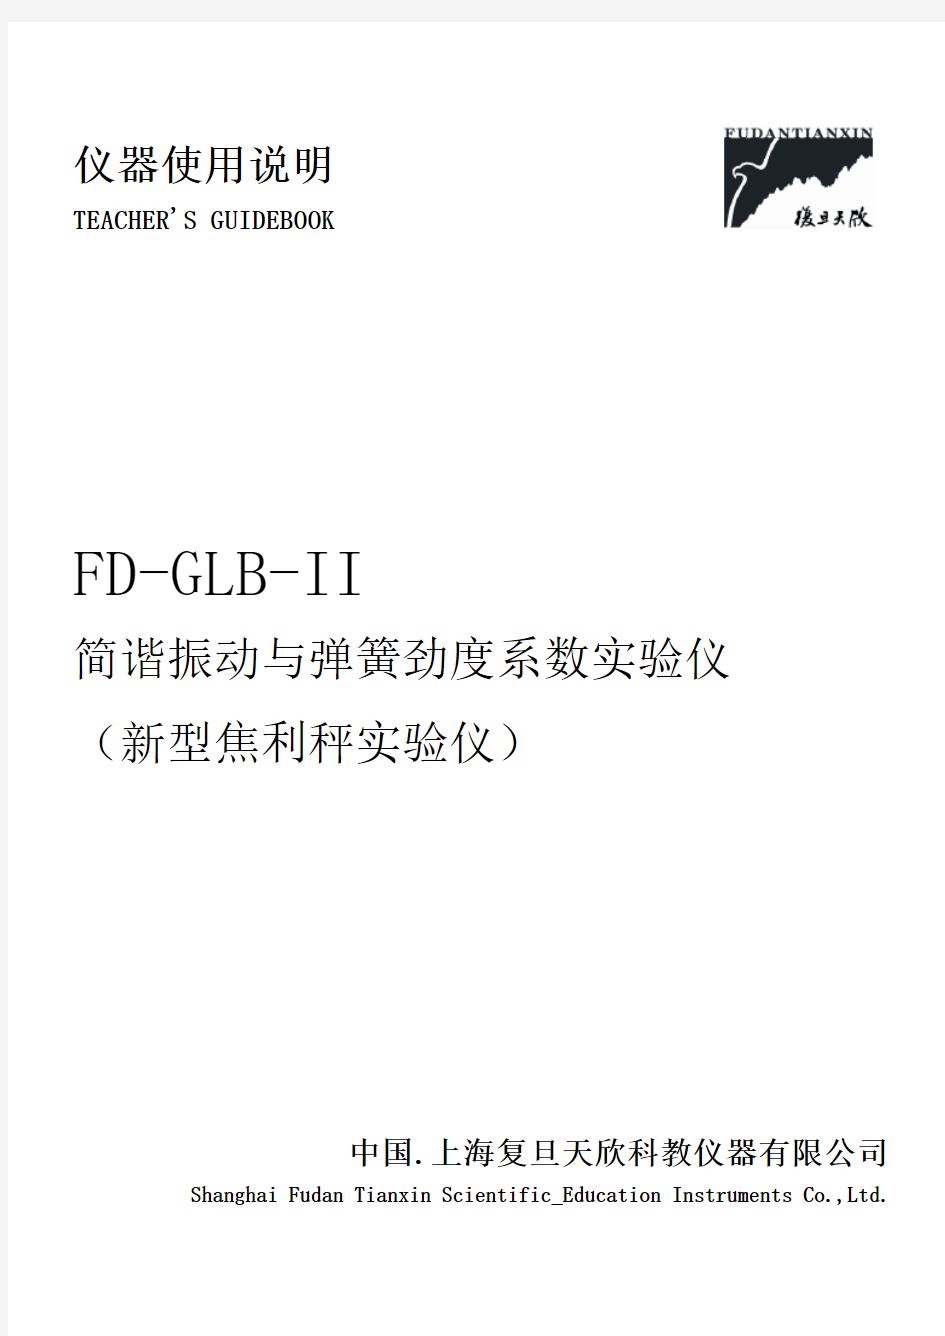 FD-GLB-II型新型焦利秤实验仪使用说明(080530修订)